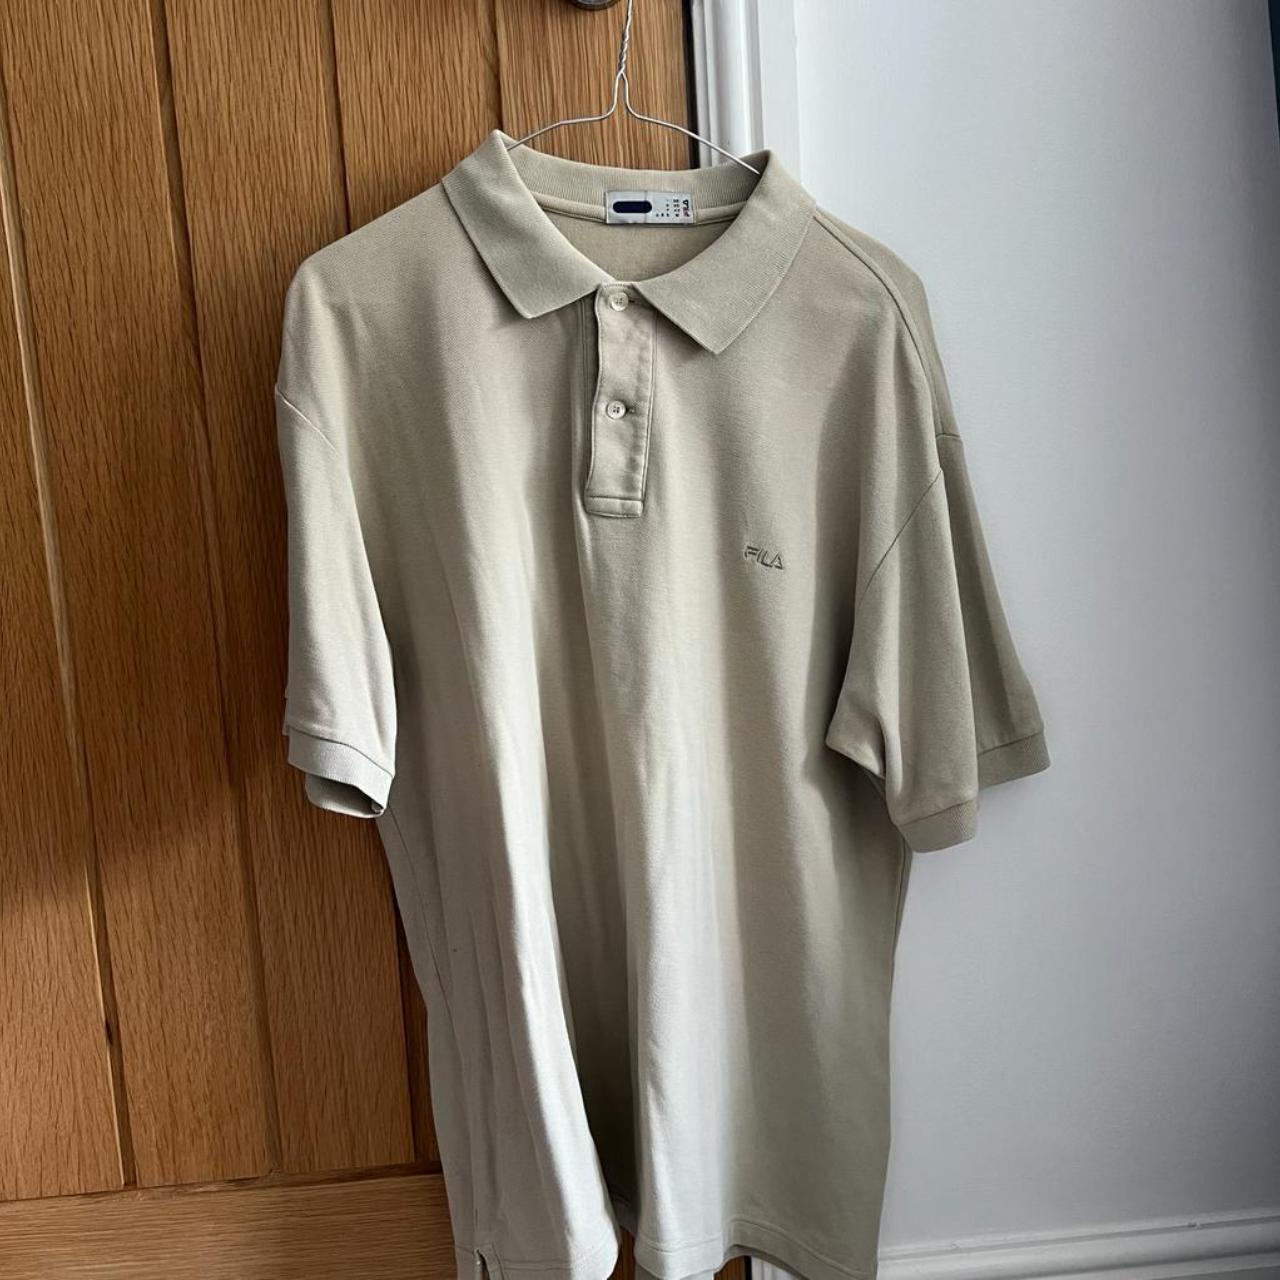 Vintage Fila Beige Polo Shirt Size M Perfect... - Depop